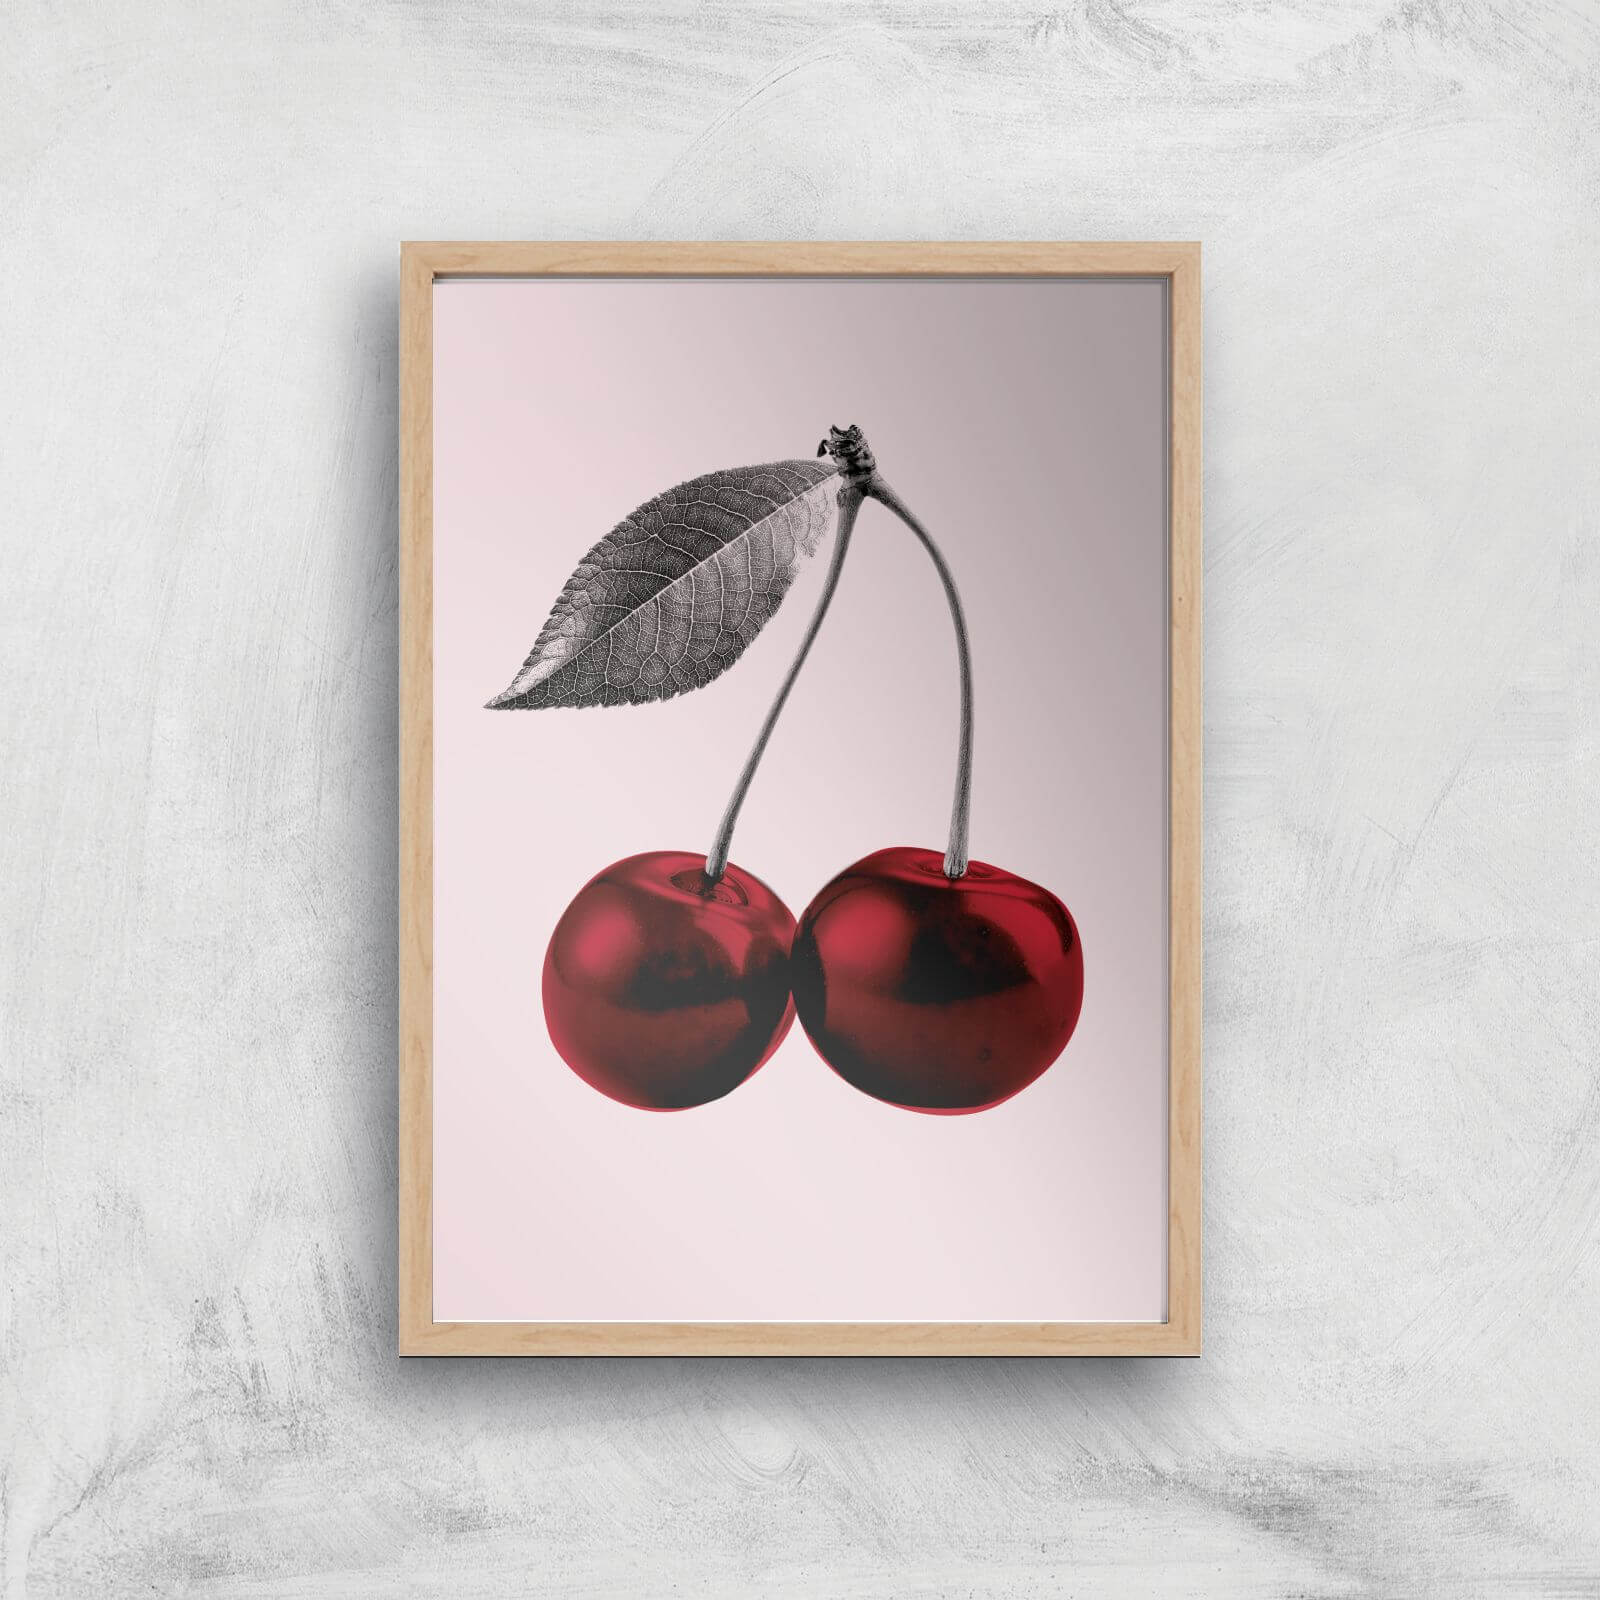 Cherries Giclee Art Print - A4 - Wooden Frame